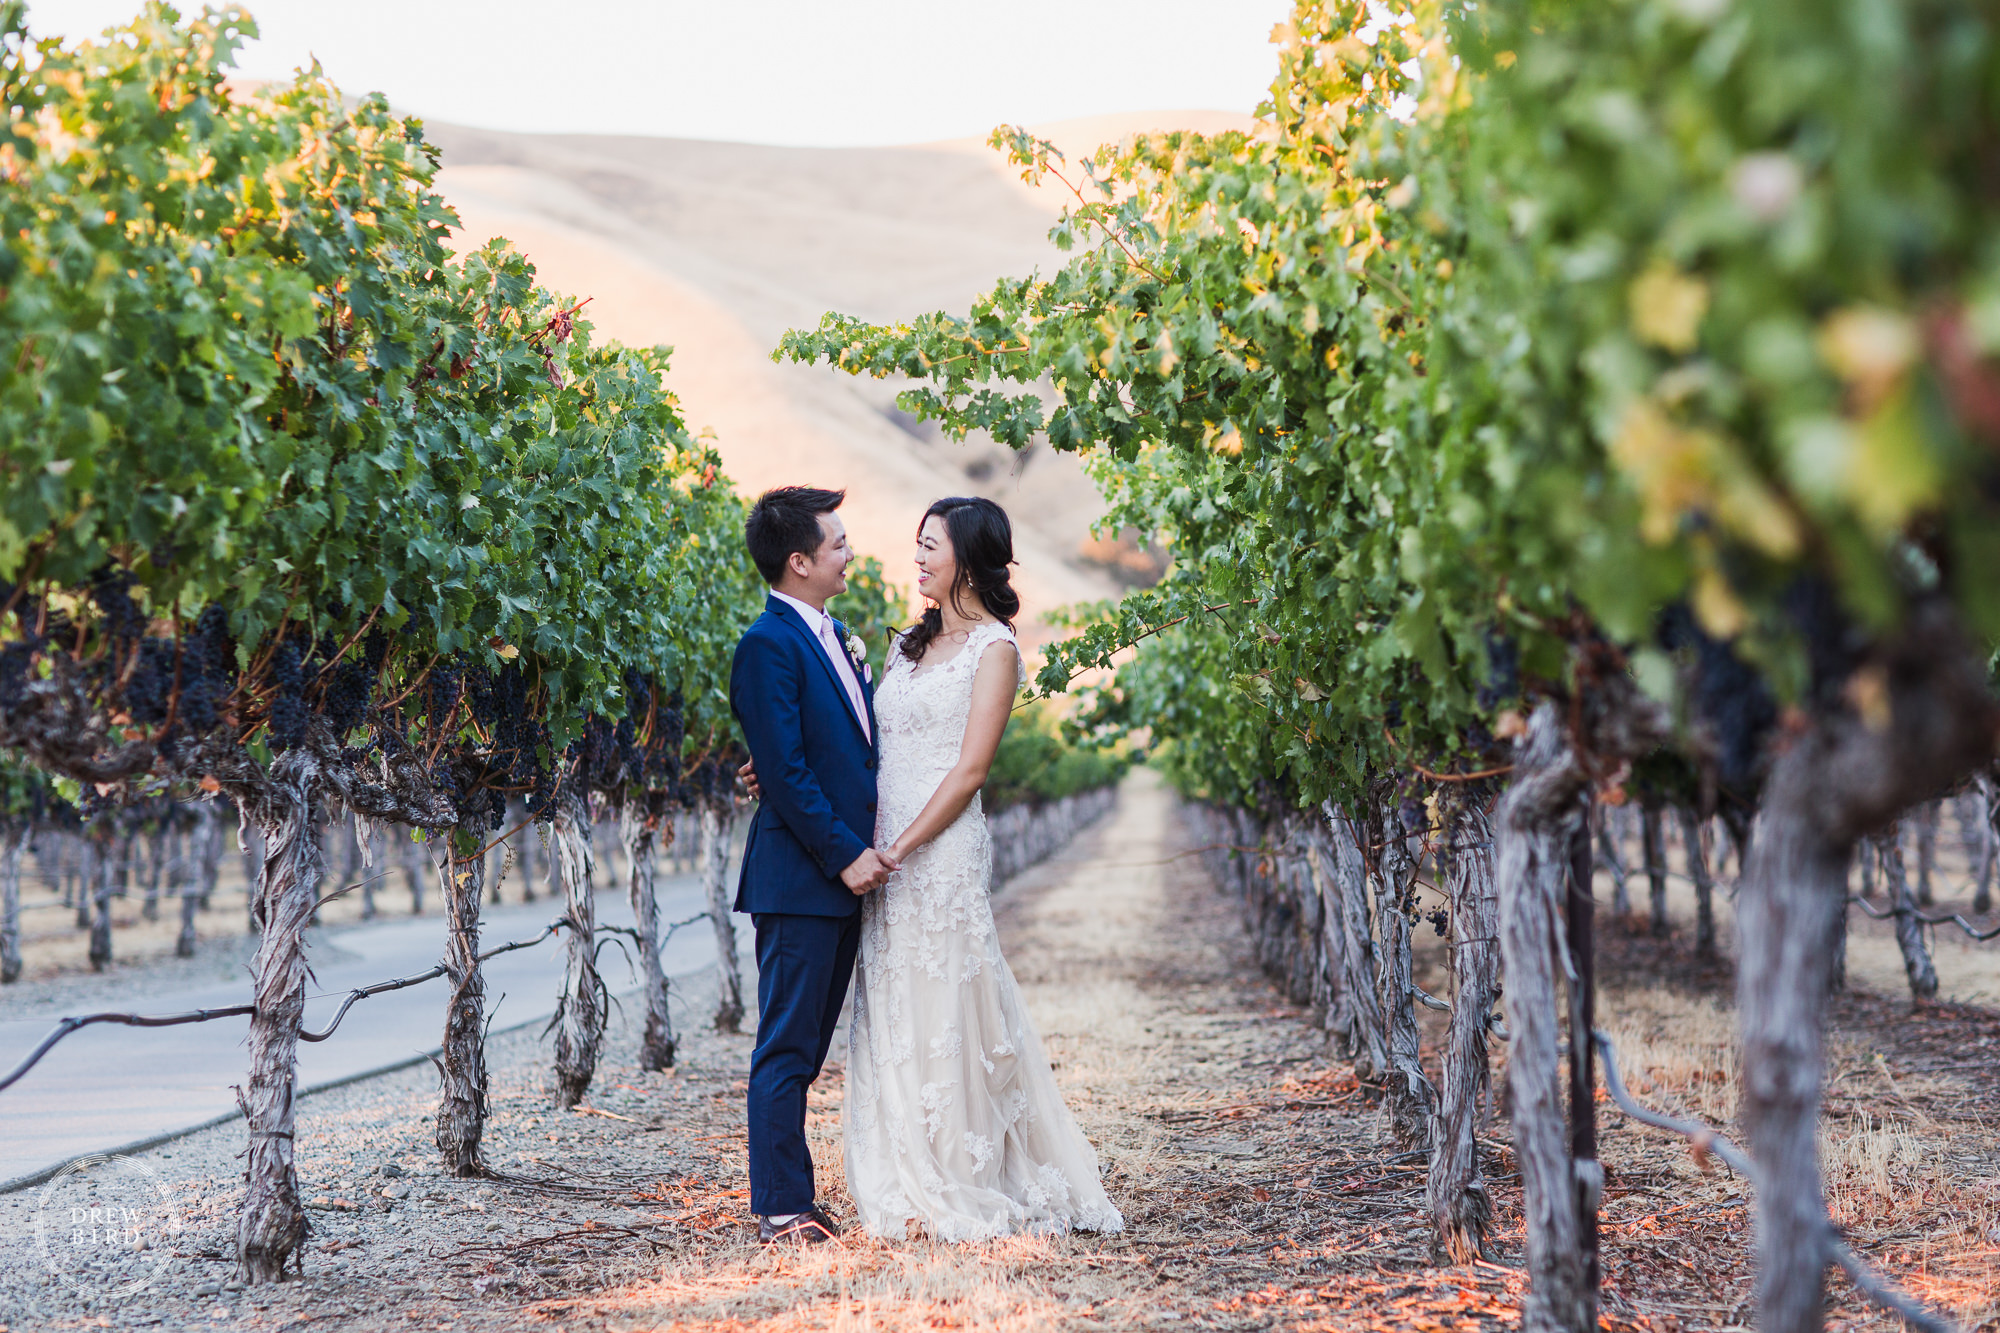 Bride and groom portrait in grape vines. Wente Vineyard wedding venue in Livermore, California.